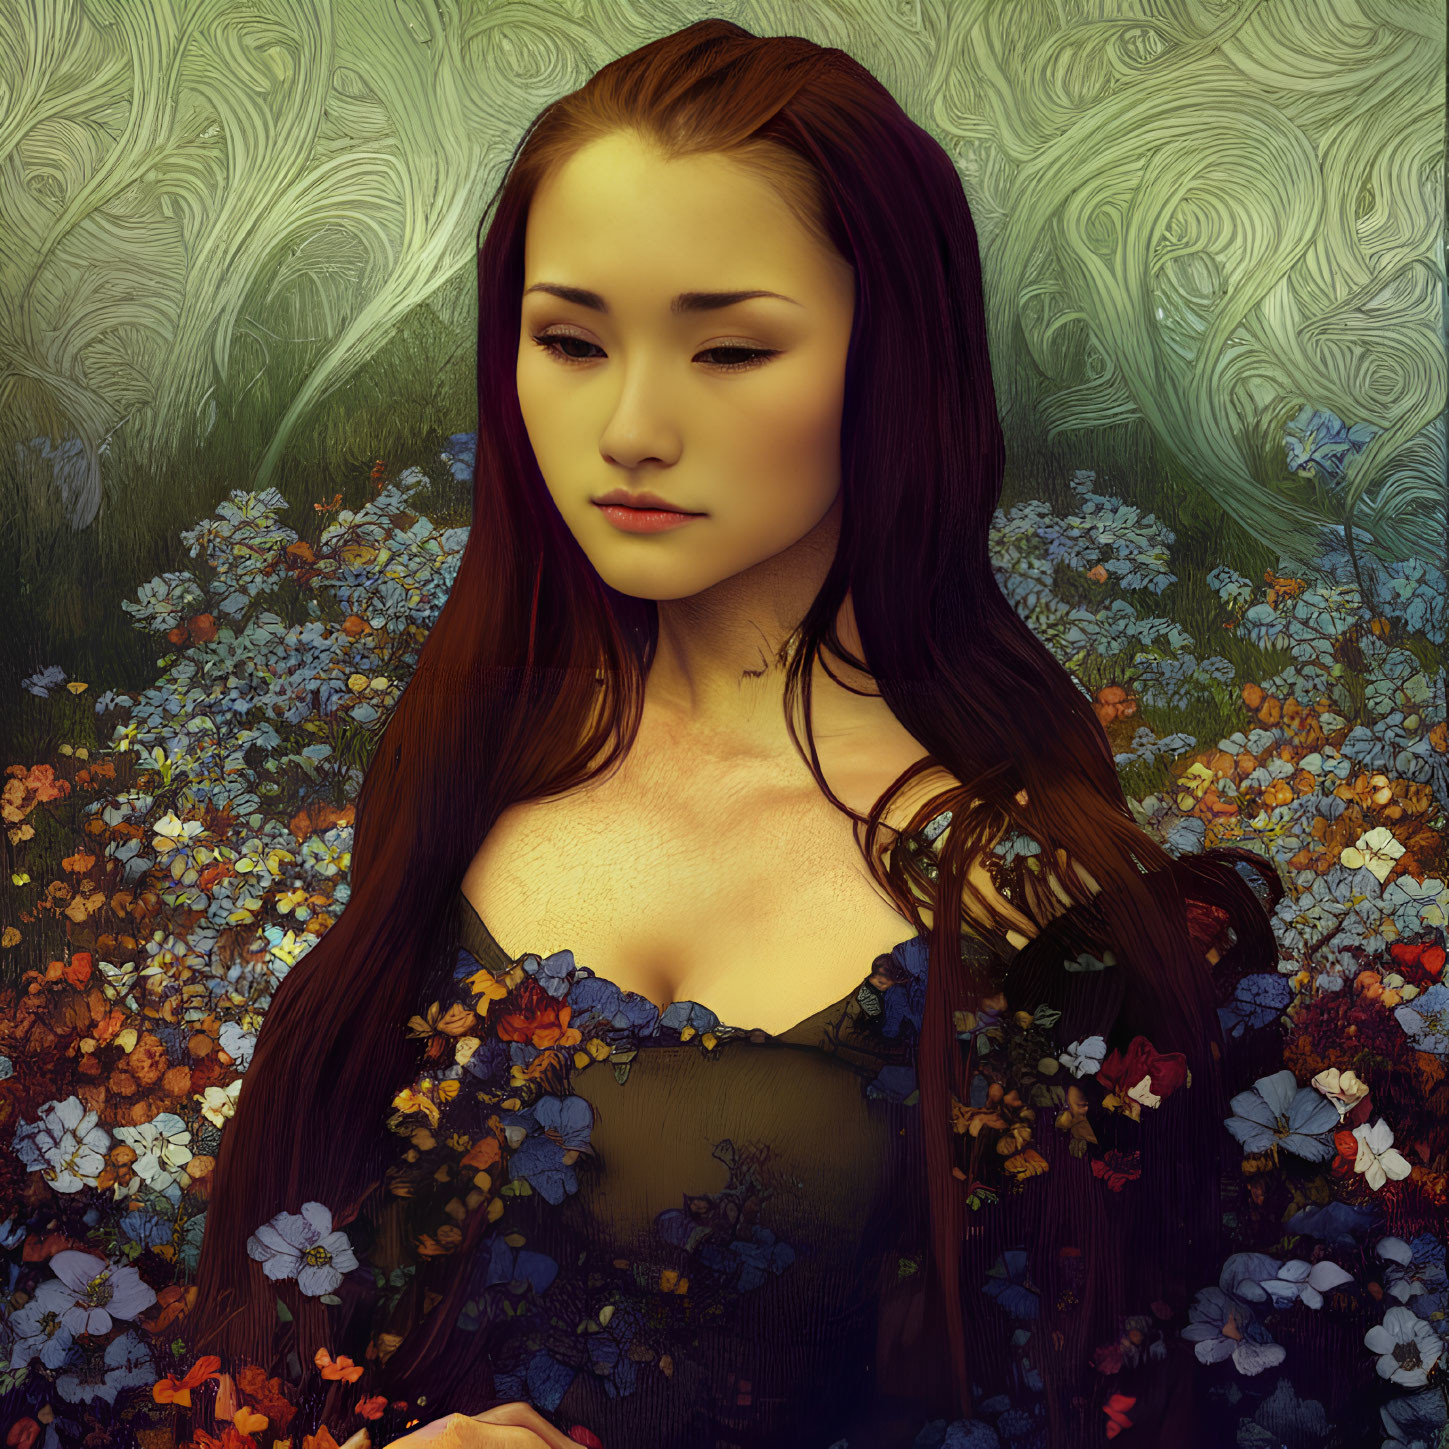 Digital artwork: Woman with dark hair in flower tapestry landscape